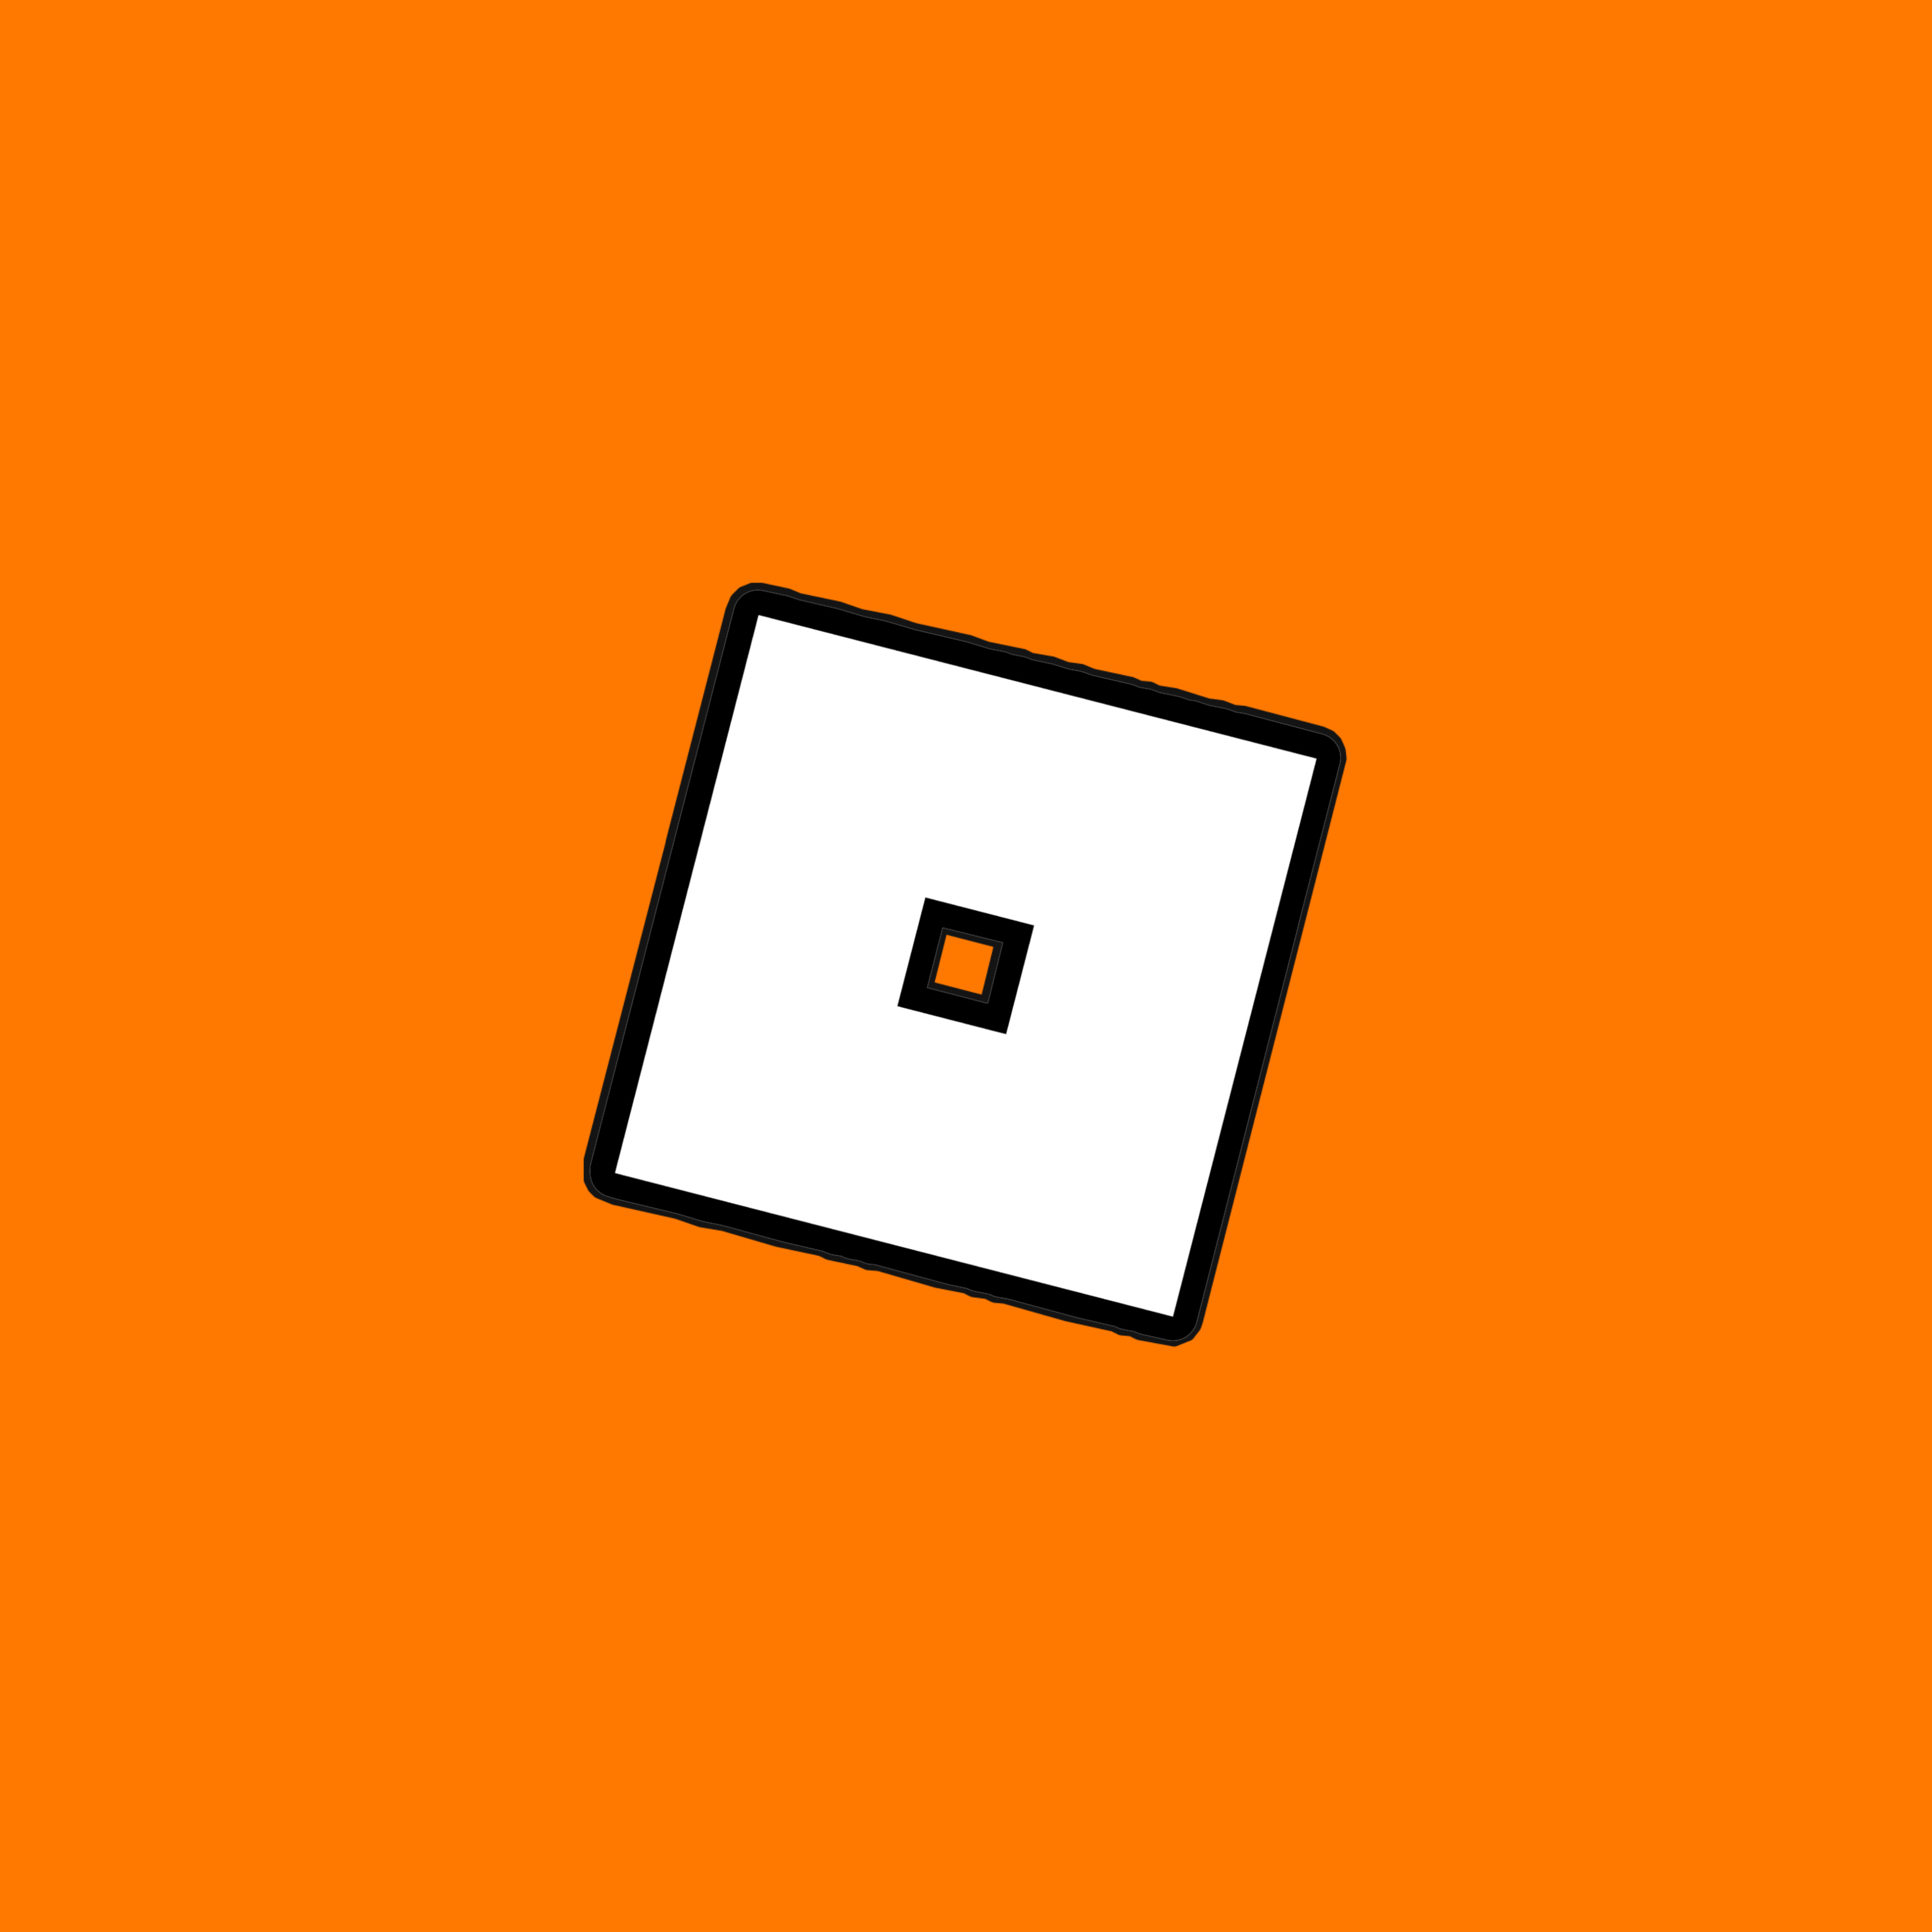 Icons Roblox Orange Roblox App Icon Image By Ii Ashe - roblox icon aesthetic pastel orange